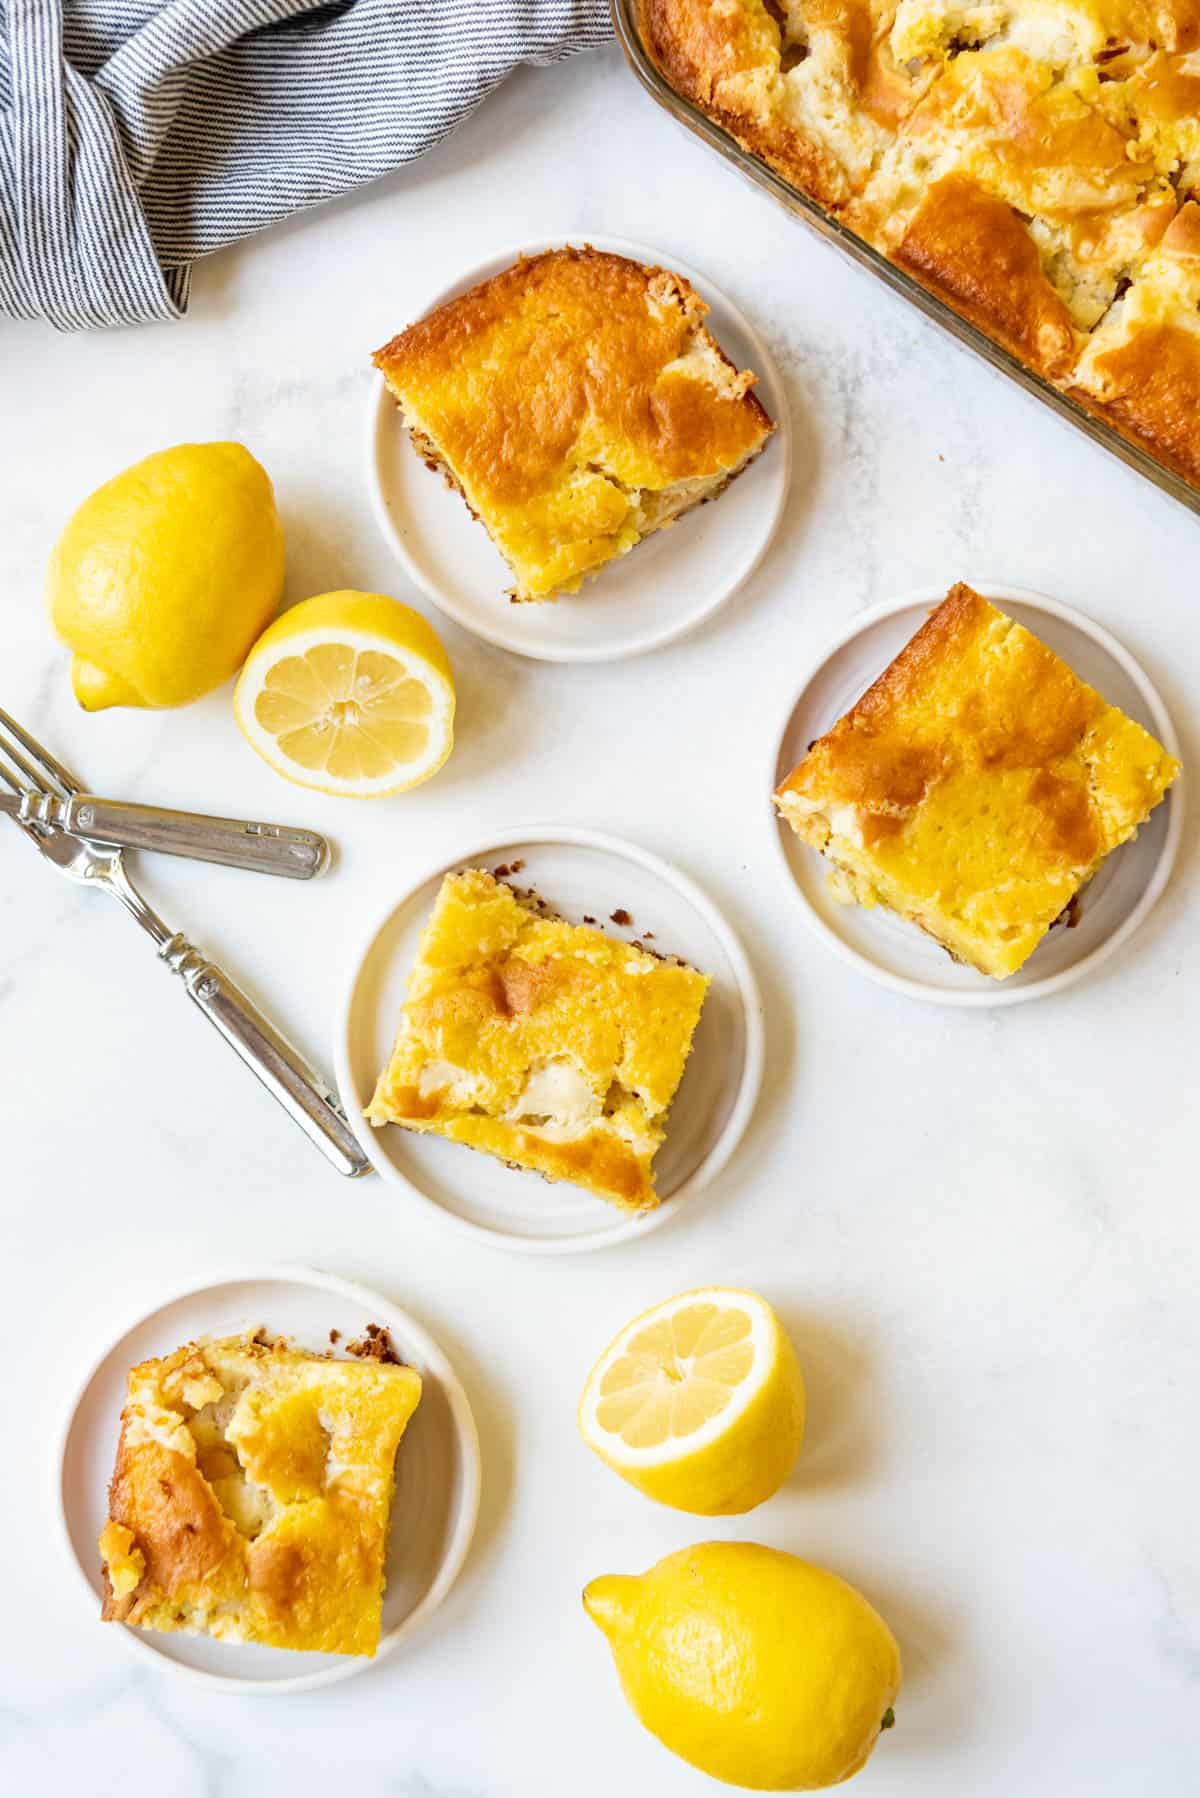 An overhead image of slices of lemon earthquake cake next to fresh lemons.